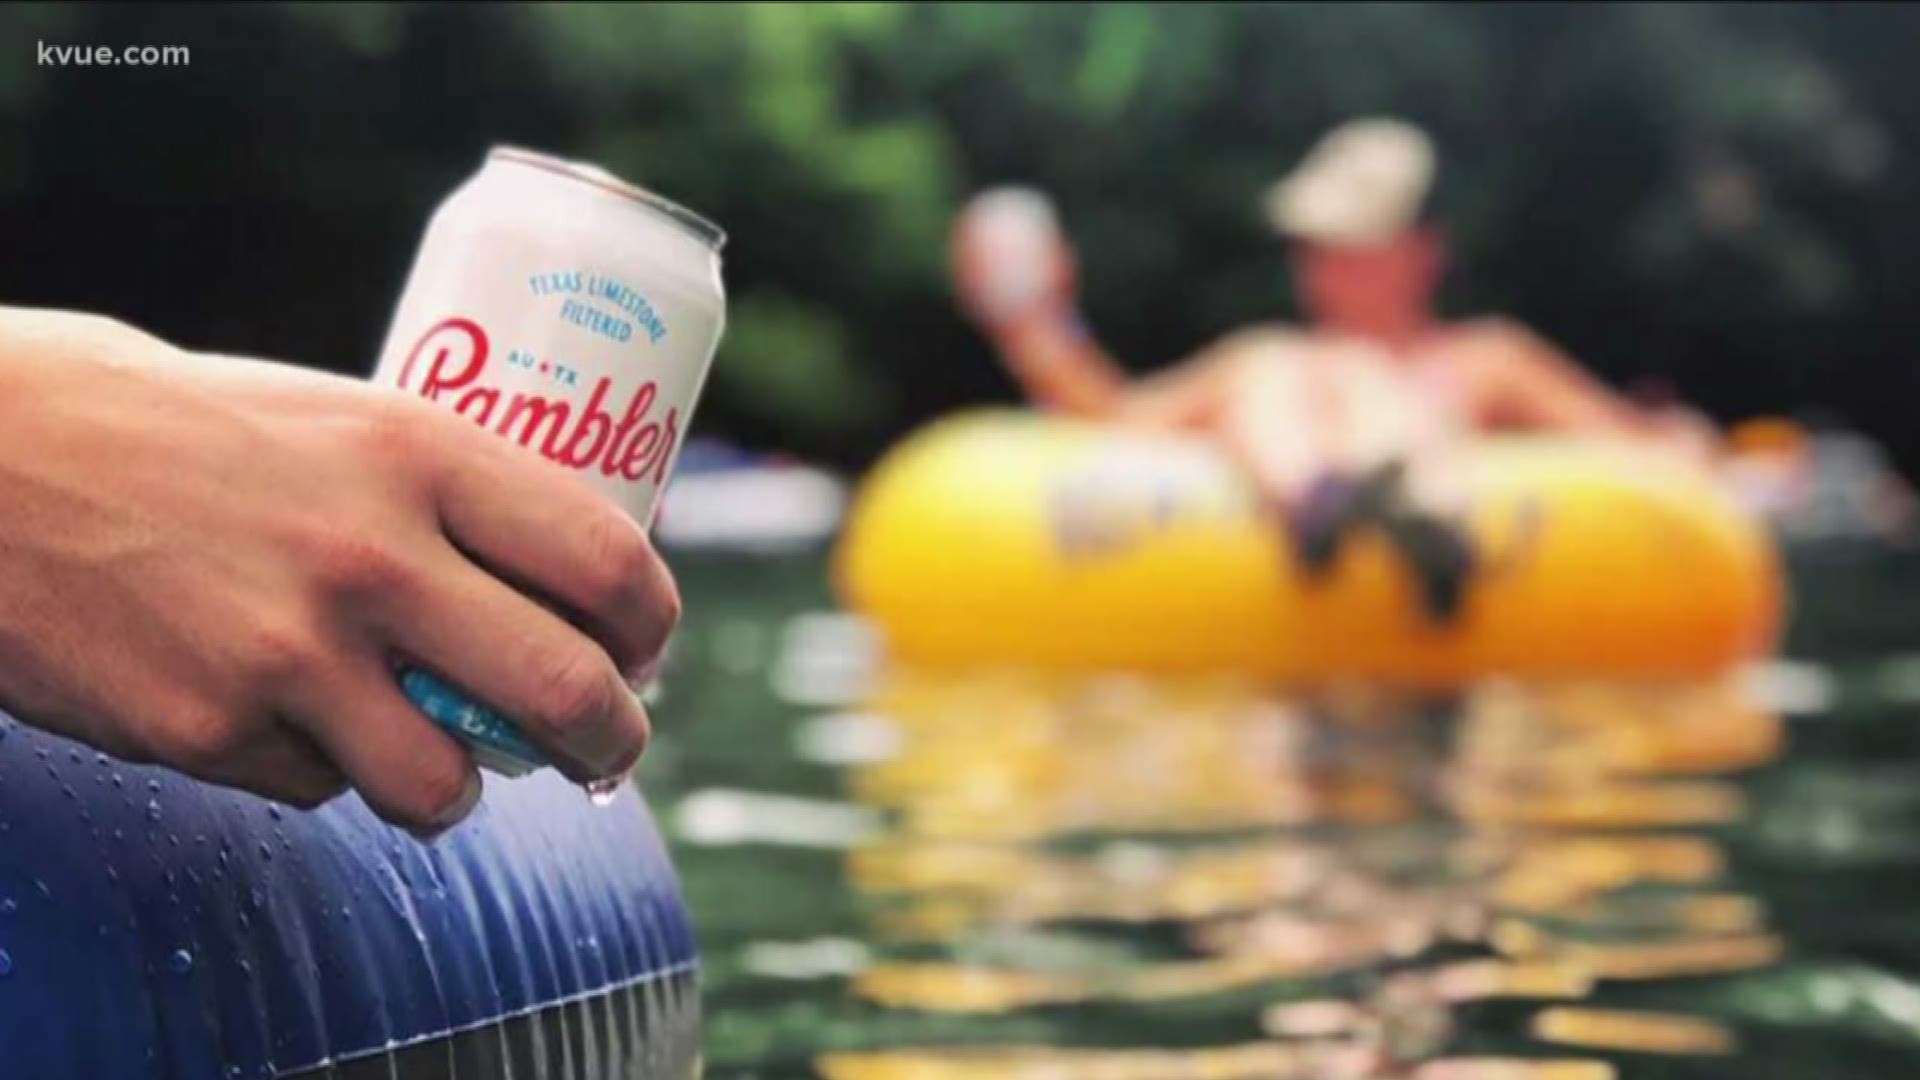 Made in Austin: Rambler sparkling water